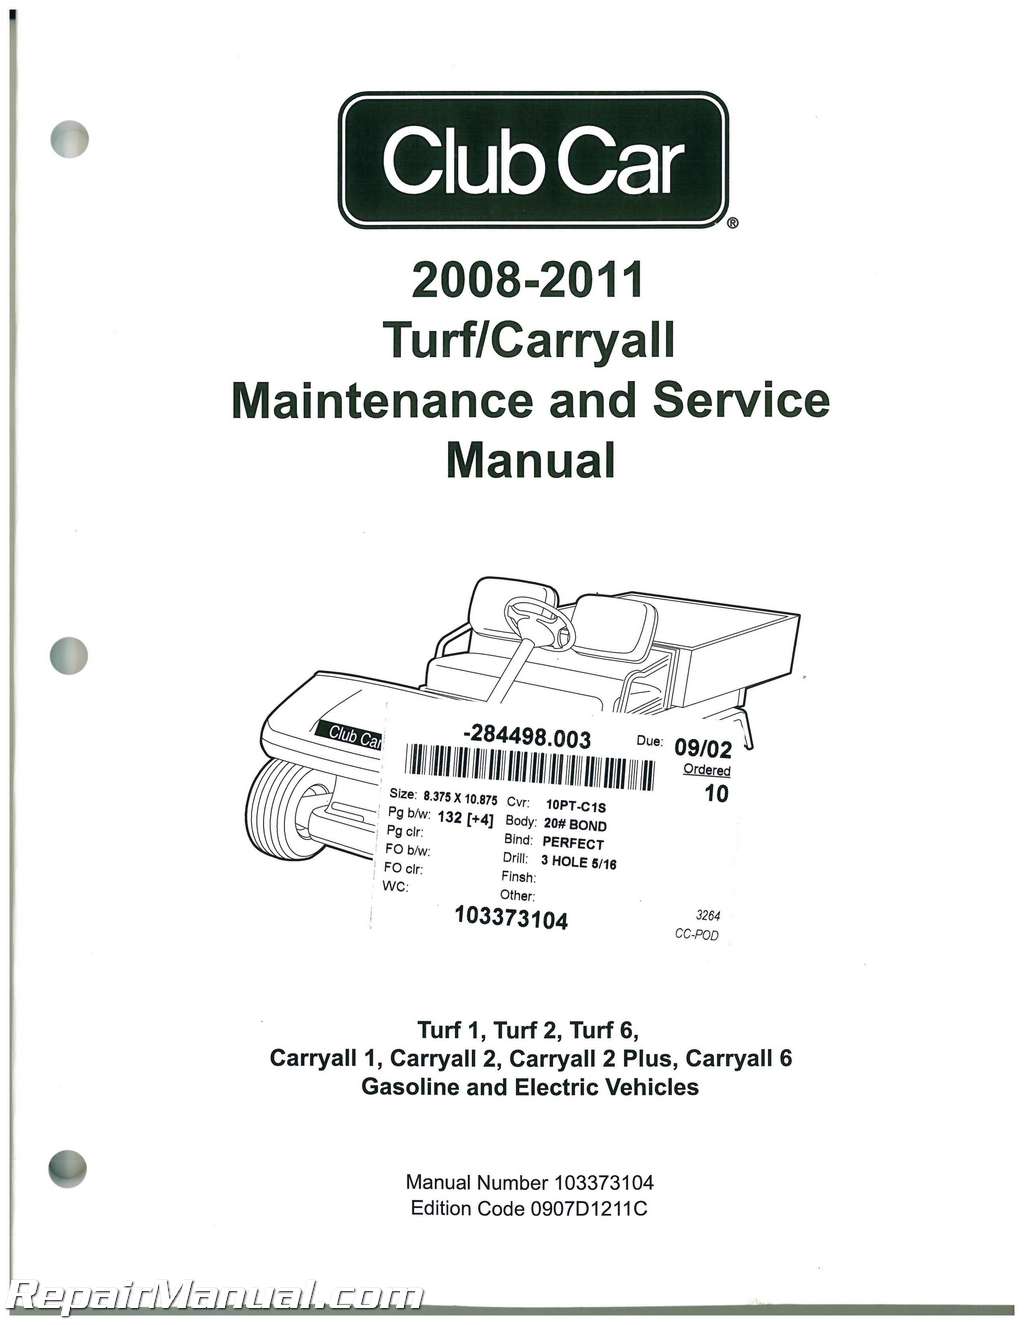 Gas Club Car Carryall 2 Wiring Diagram from www.repairmanual.com